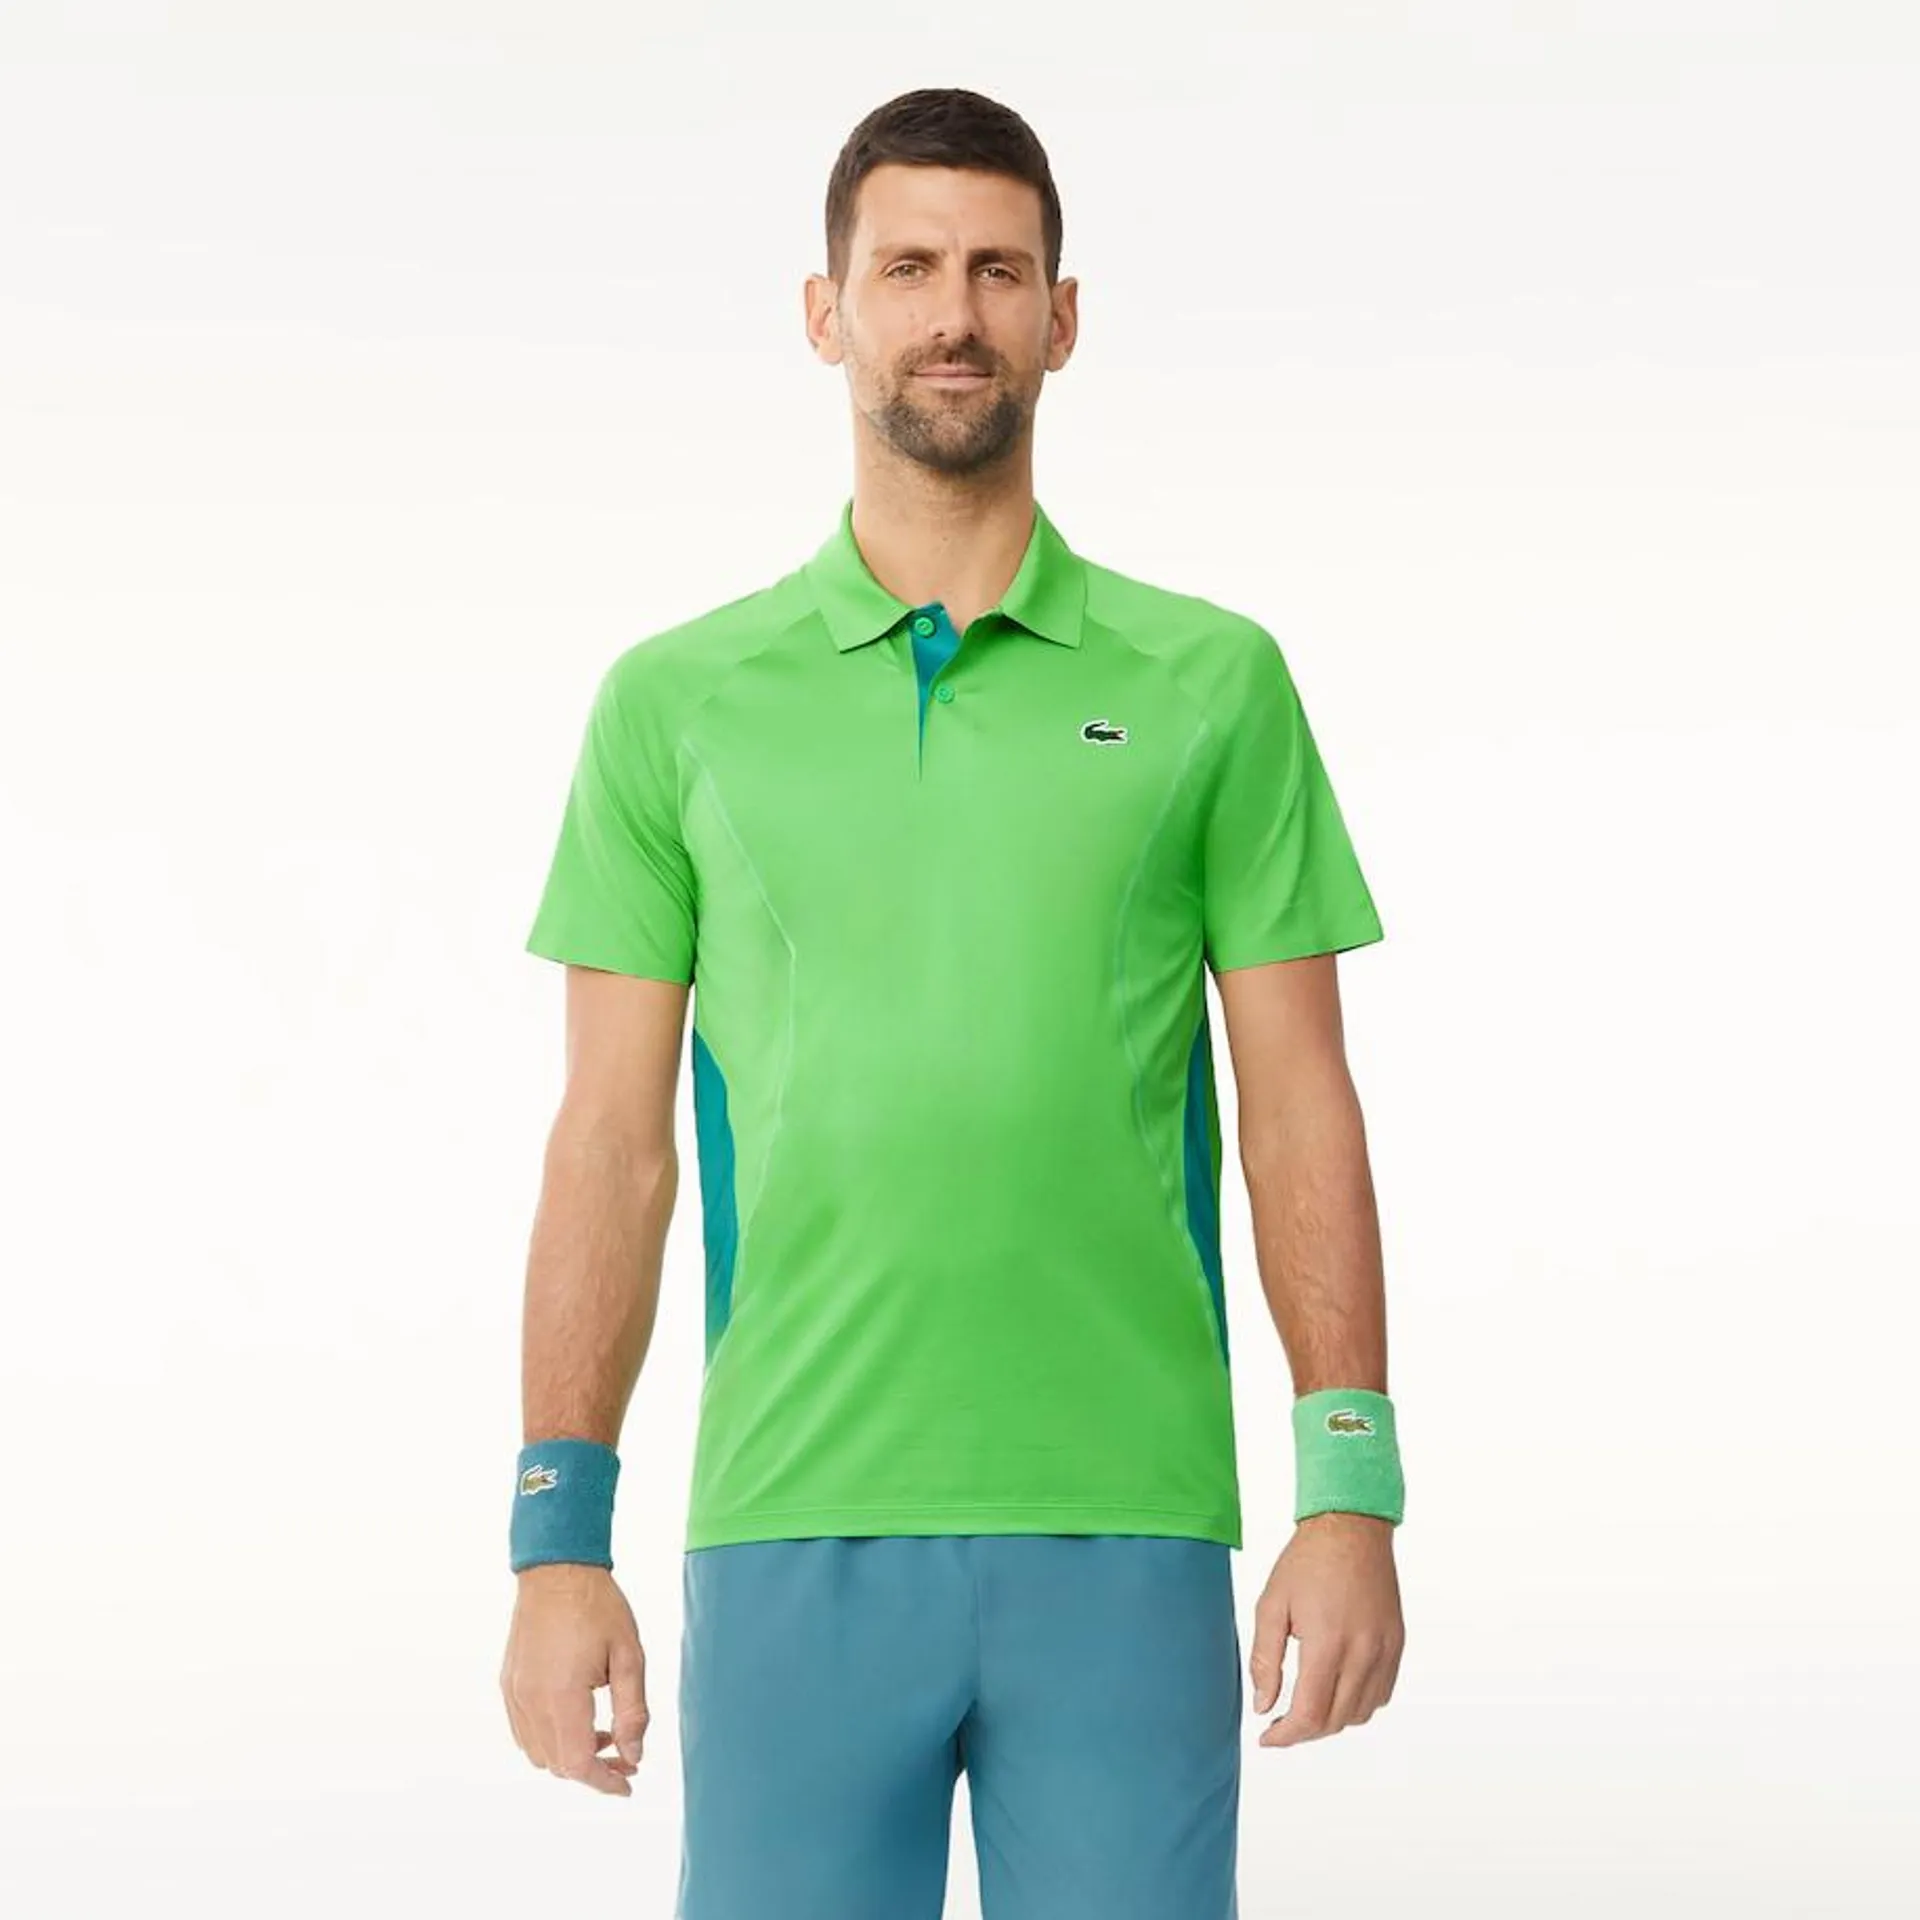 Lacoste Tennis x Novak Djokovic Ultra-Dry Polo Shirt